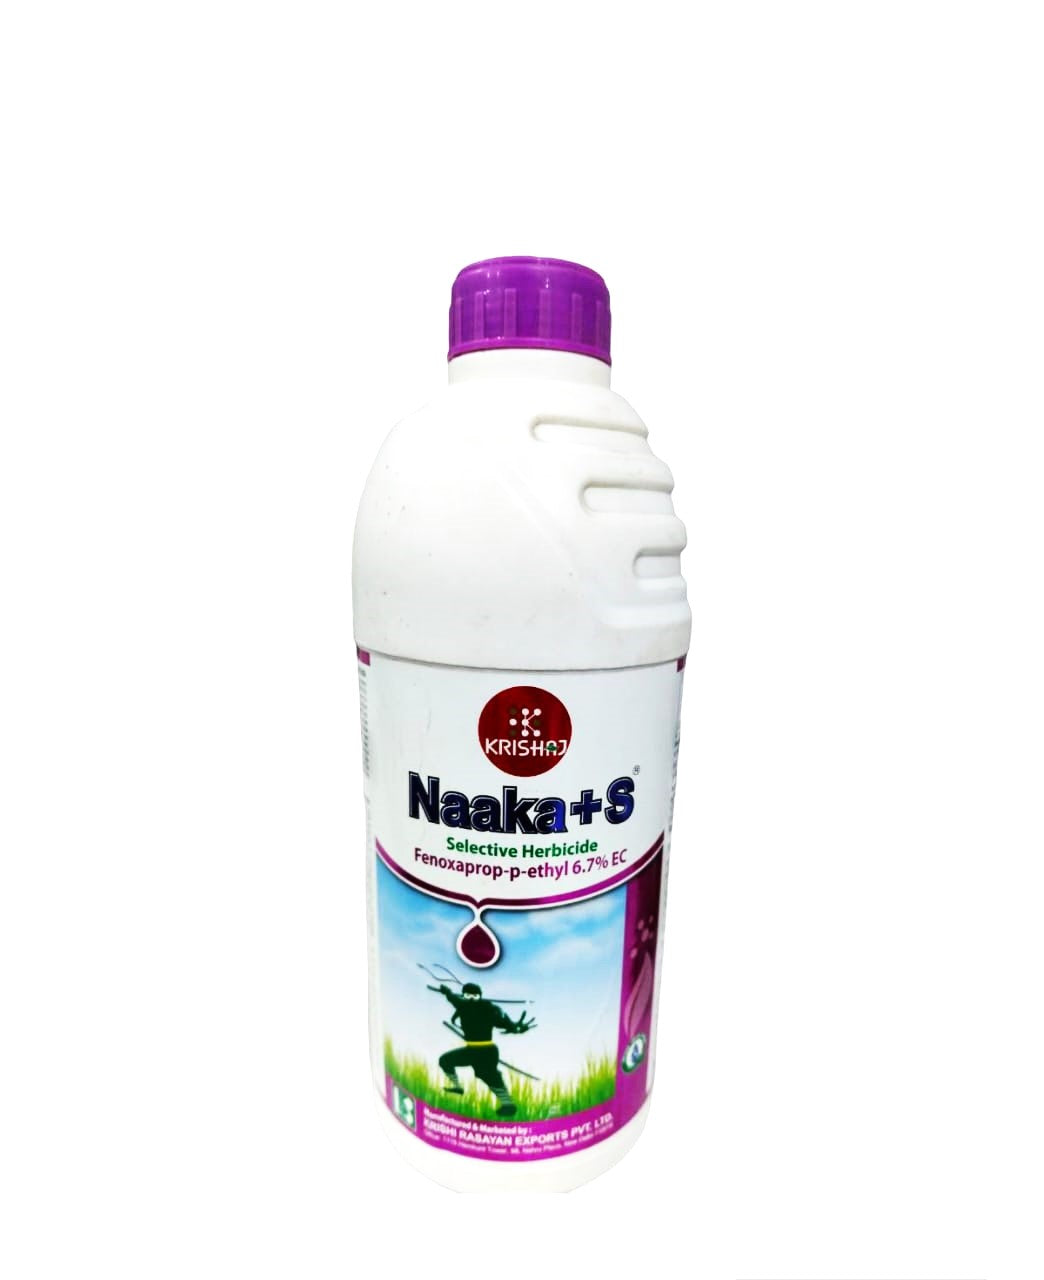 Krishi Rasayan Nakka+S (Fenoxaprop-p-ethyl6.7%EC)Herbicide